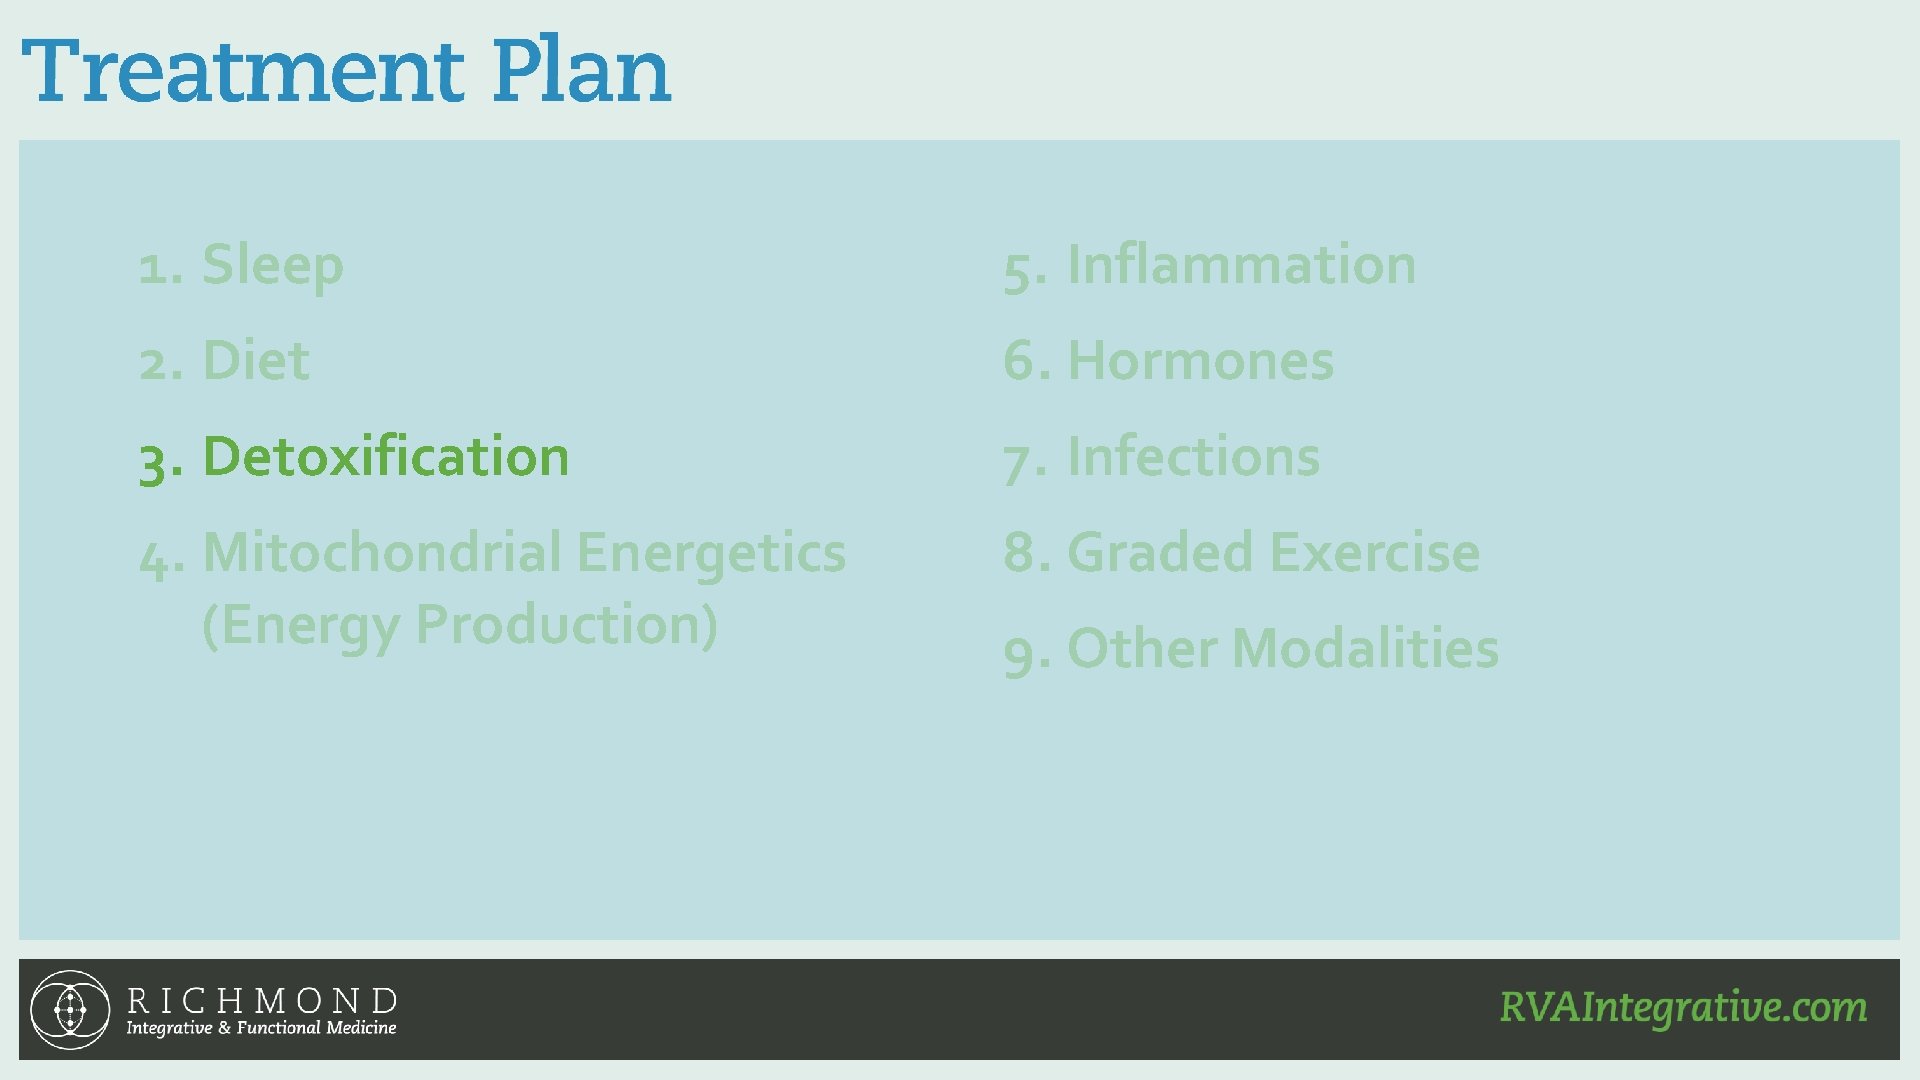 1. Sleep 5. Inflammation 2. Diet 6. Hormones 3. Detoxification 7. Infections 4. Mitochondrial